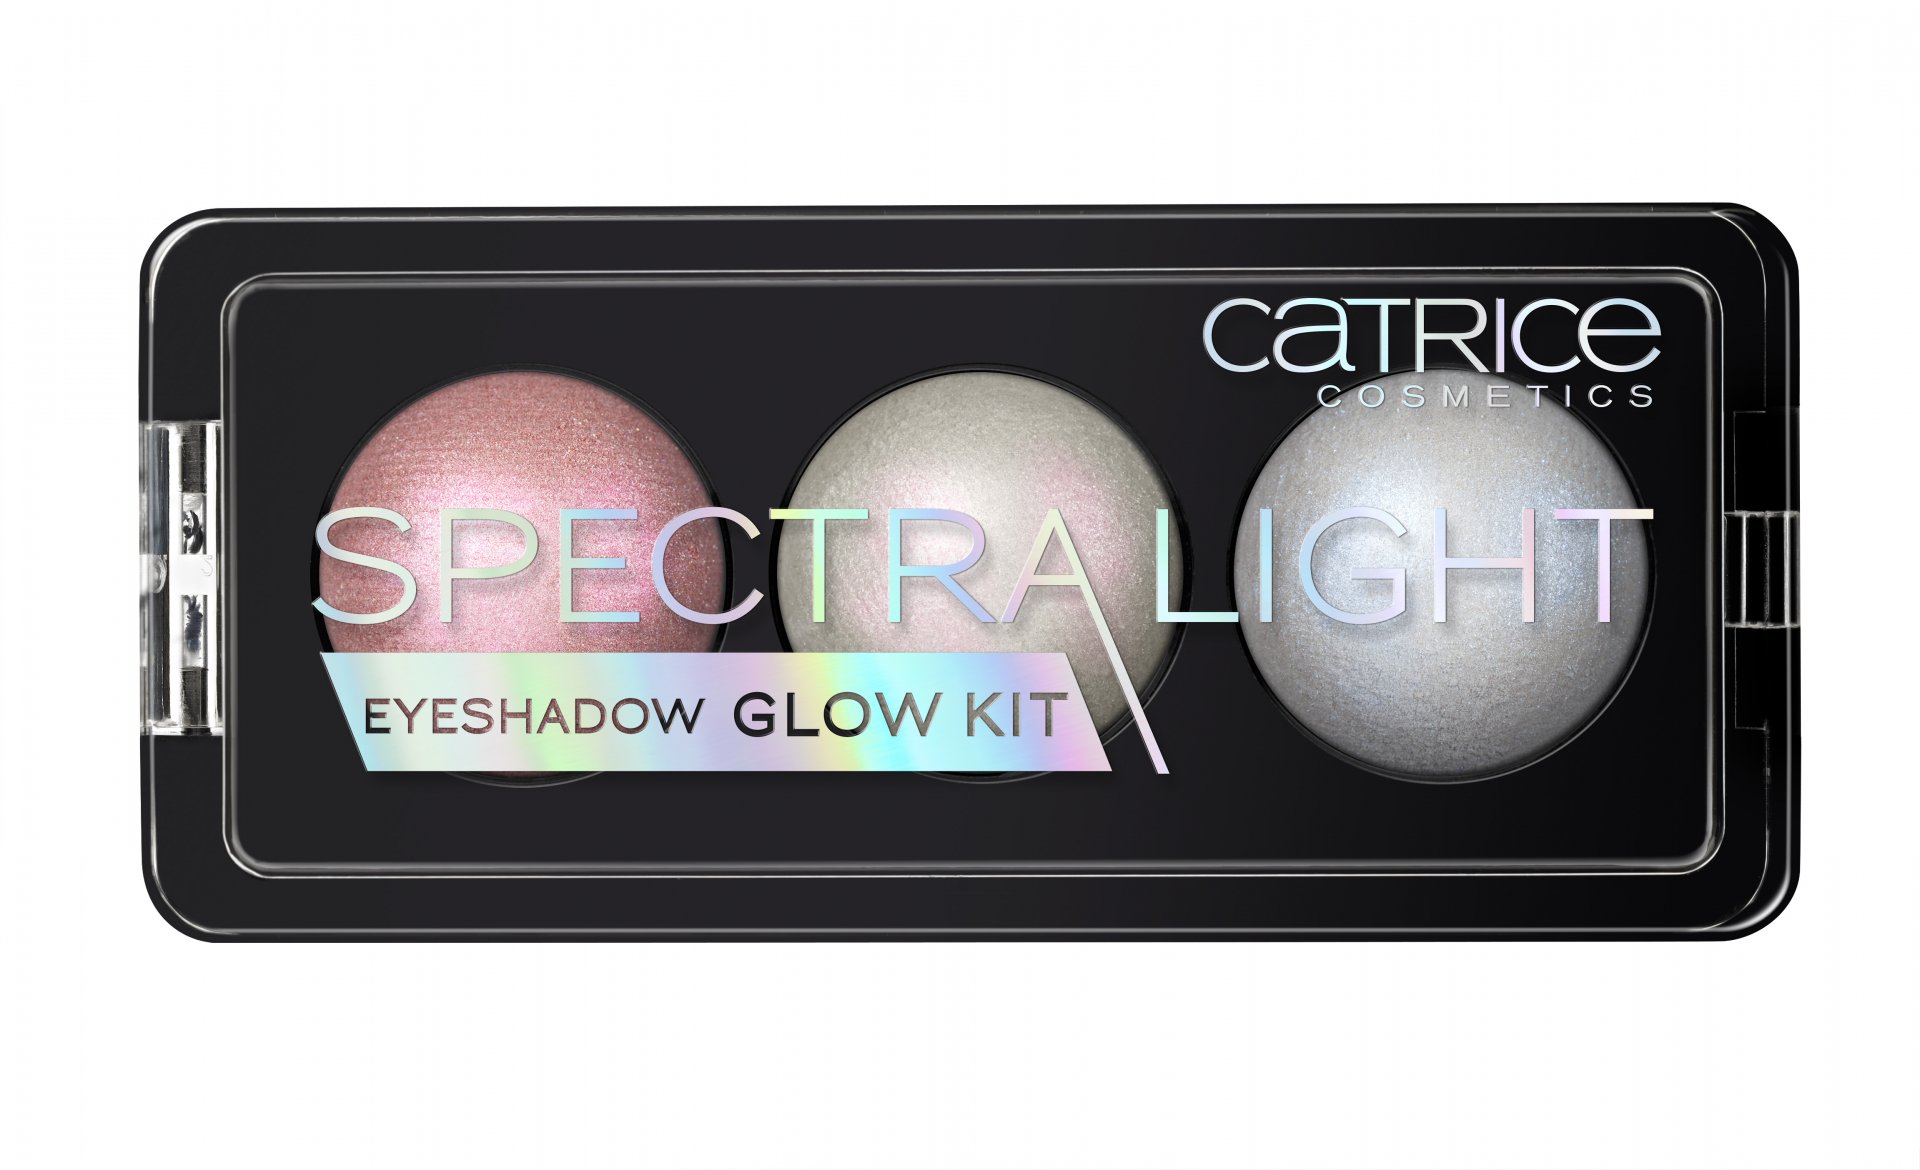 Catrice SpectraLight Eyeshadow Glow Kit 010 - คาทริซสเป็คตร้าไลท์อายแชโดว์โกลว์คิต 010